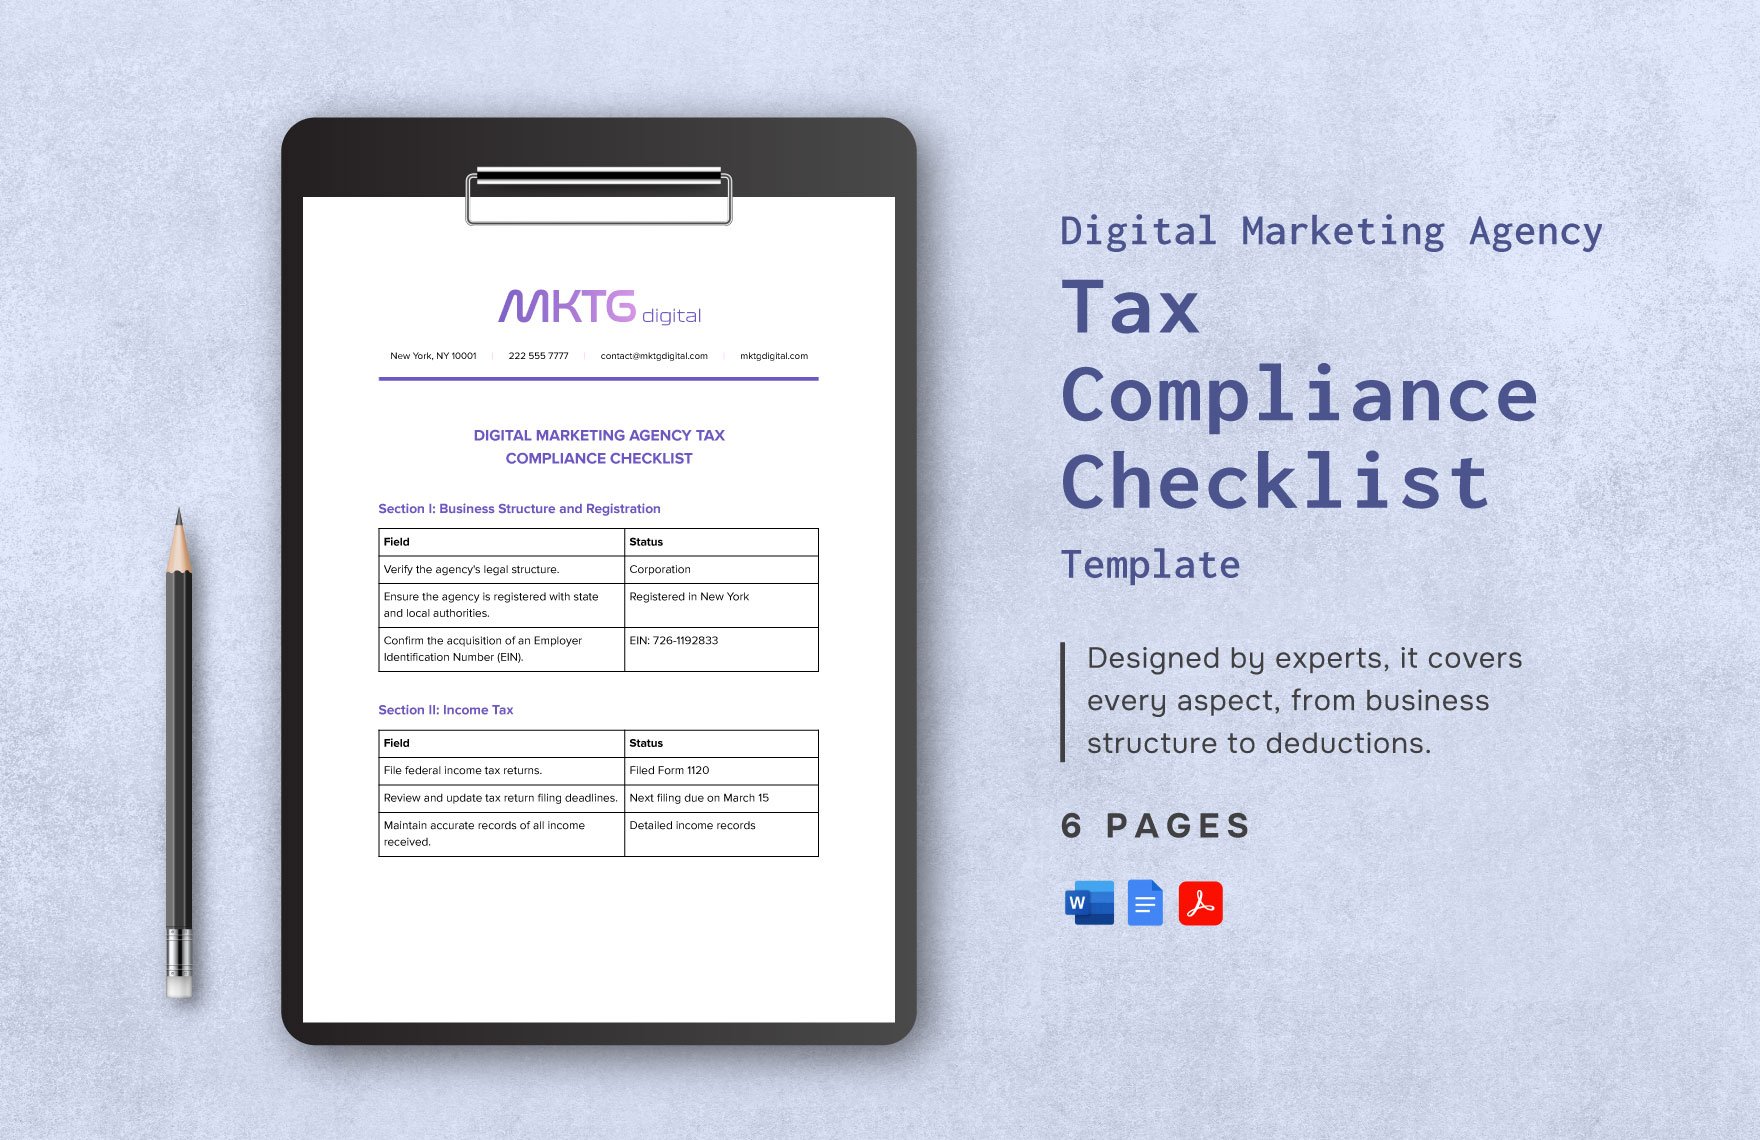 Digital Marketing Agency Tax Compliance Checklist Template in Word, Google Docs, PDF